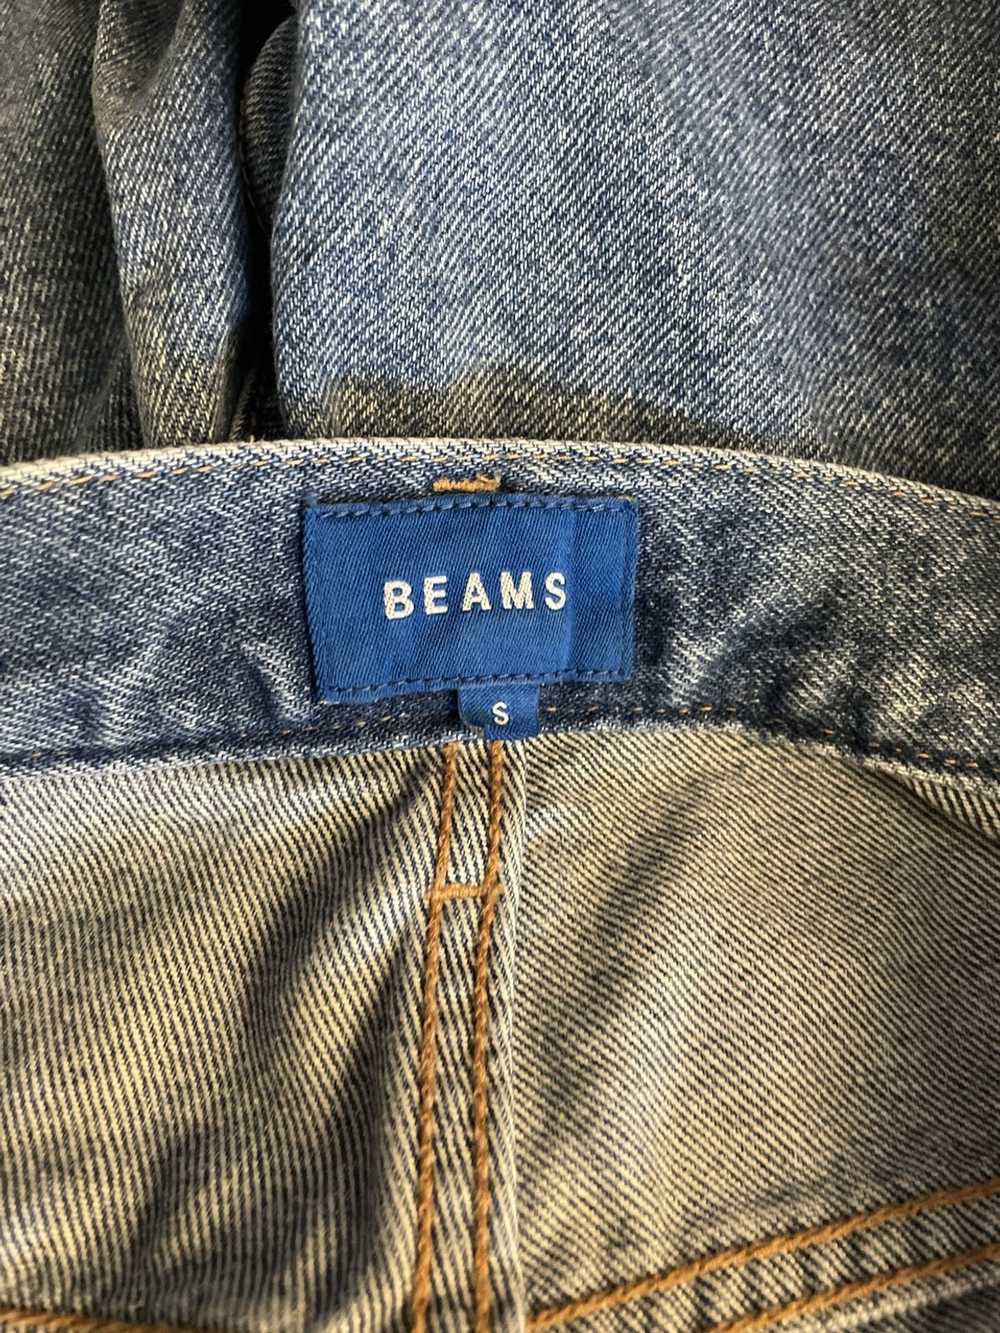 Beams Plus Beams plus trapped jeans - image 3